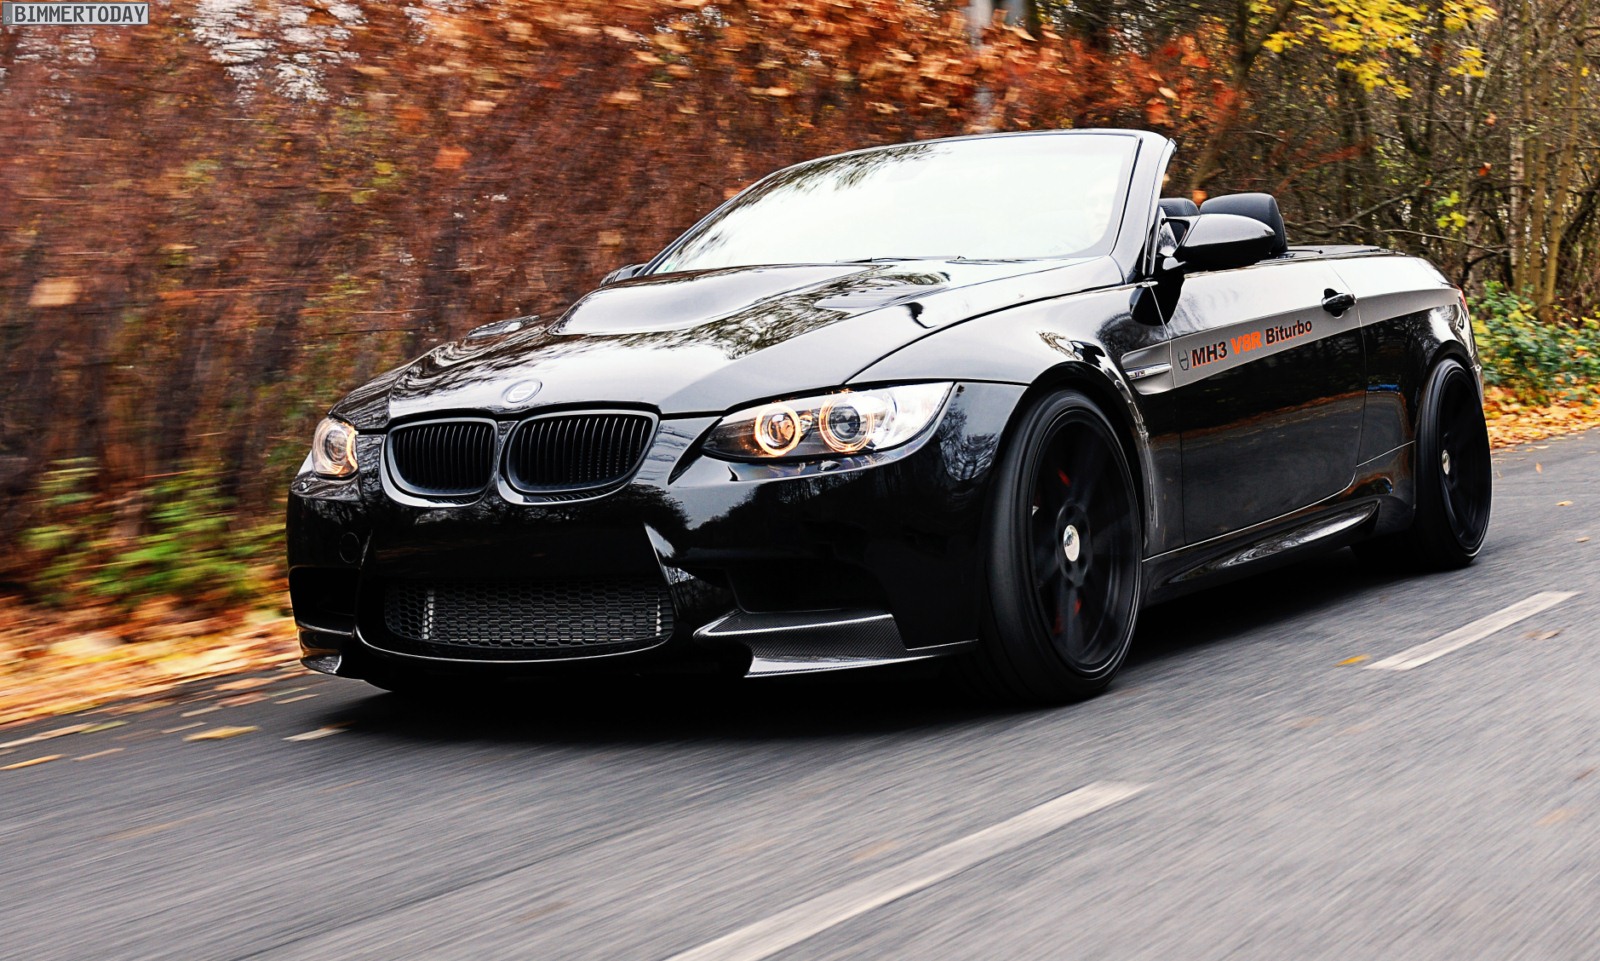 https://cdn.bimmertoday.de/wp-content/uploads/Manhart-BMW-M3-Cabrio-Tuning-MH3-V8-R-Biturbo-E93-2012-01.jpg